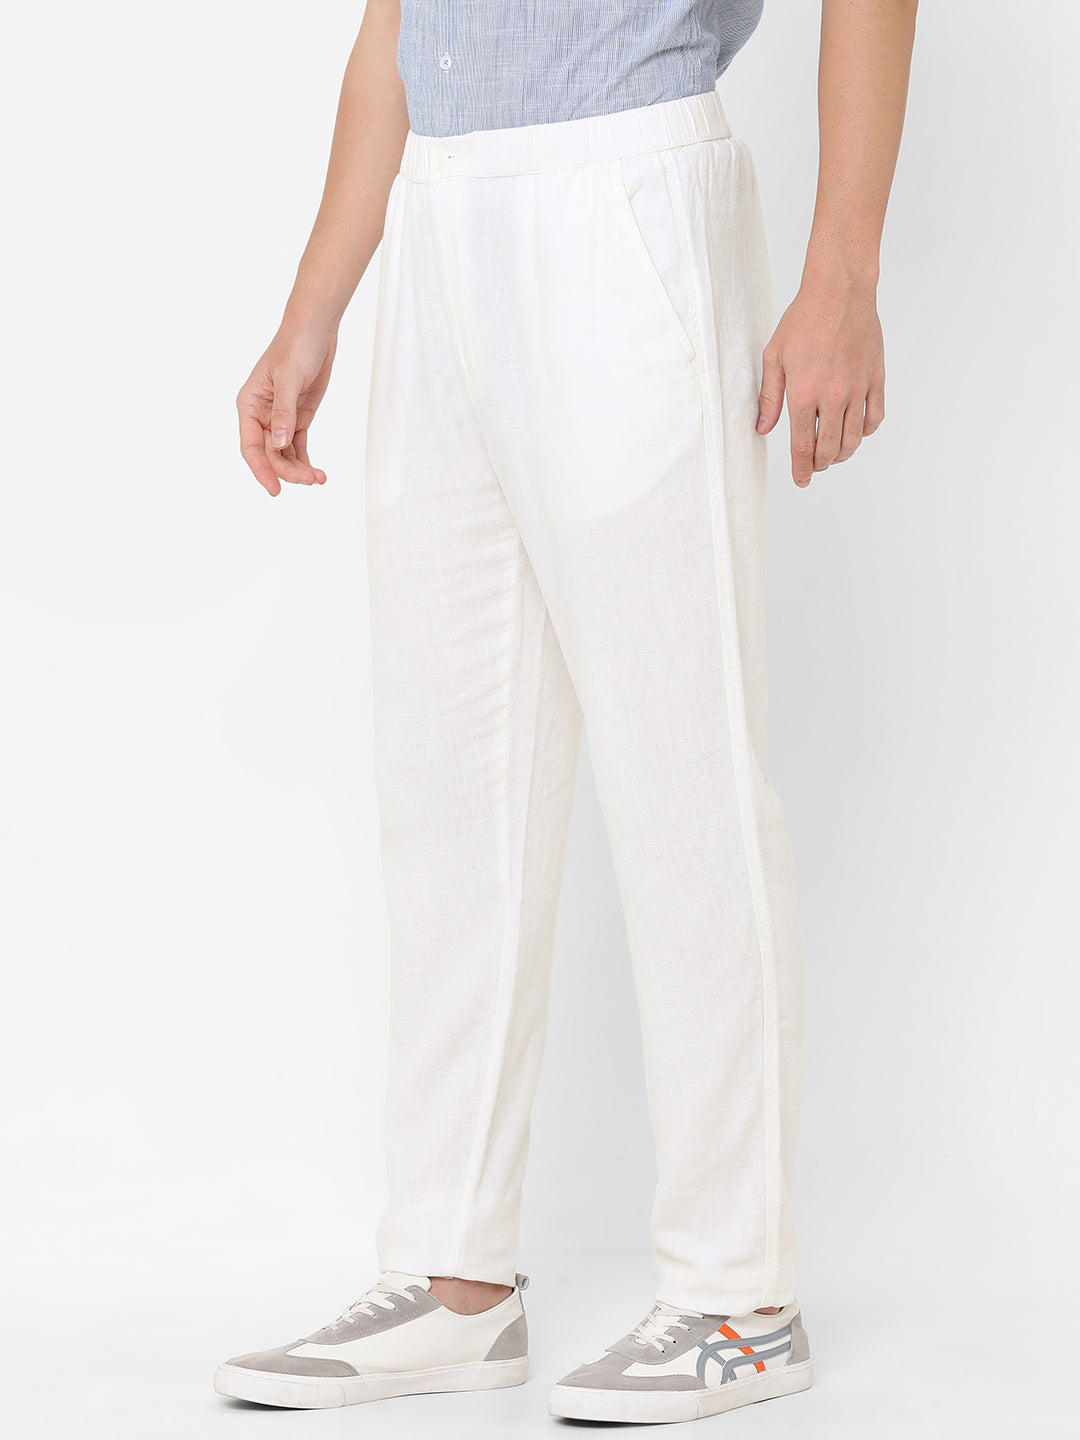 Buy White Trousers  Pants for Men by AJIO Online  Ajiocom